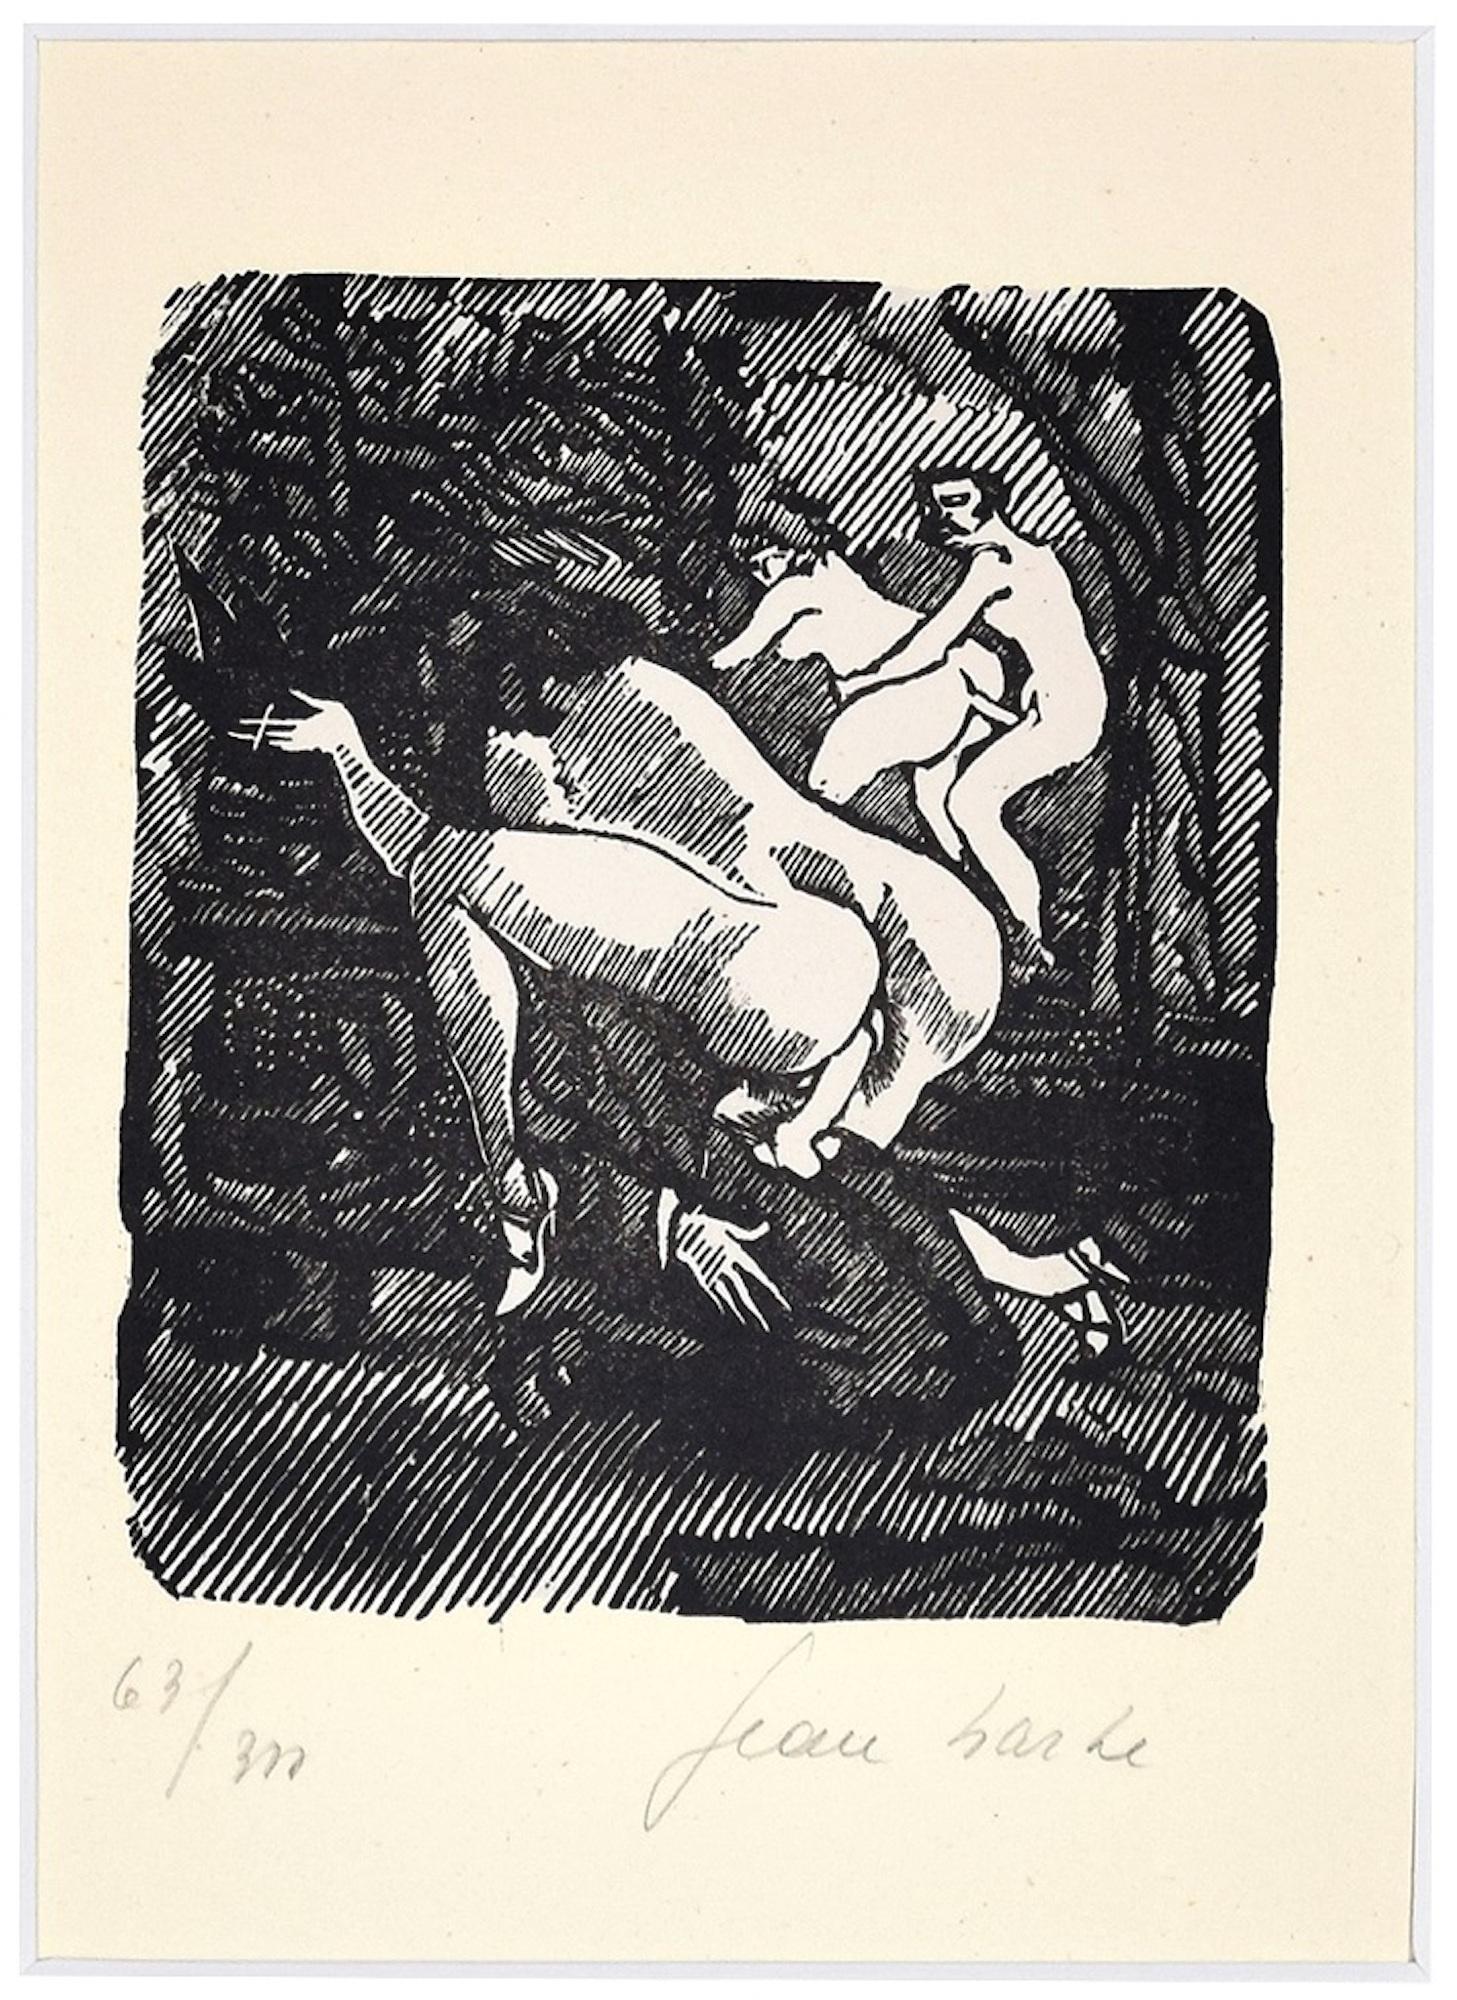 Erotism - Linocut on Paper by Jean Barbe / Mino Maccari - 1945